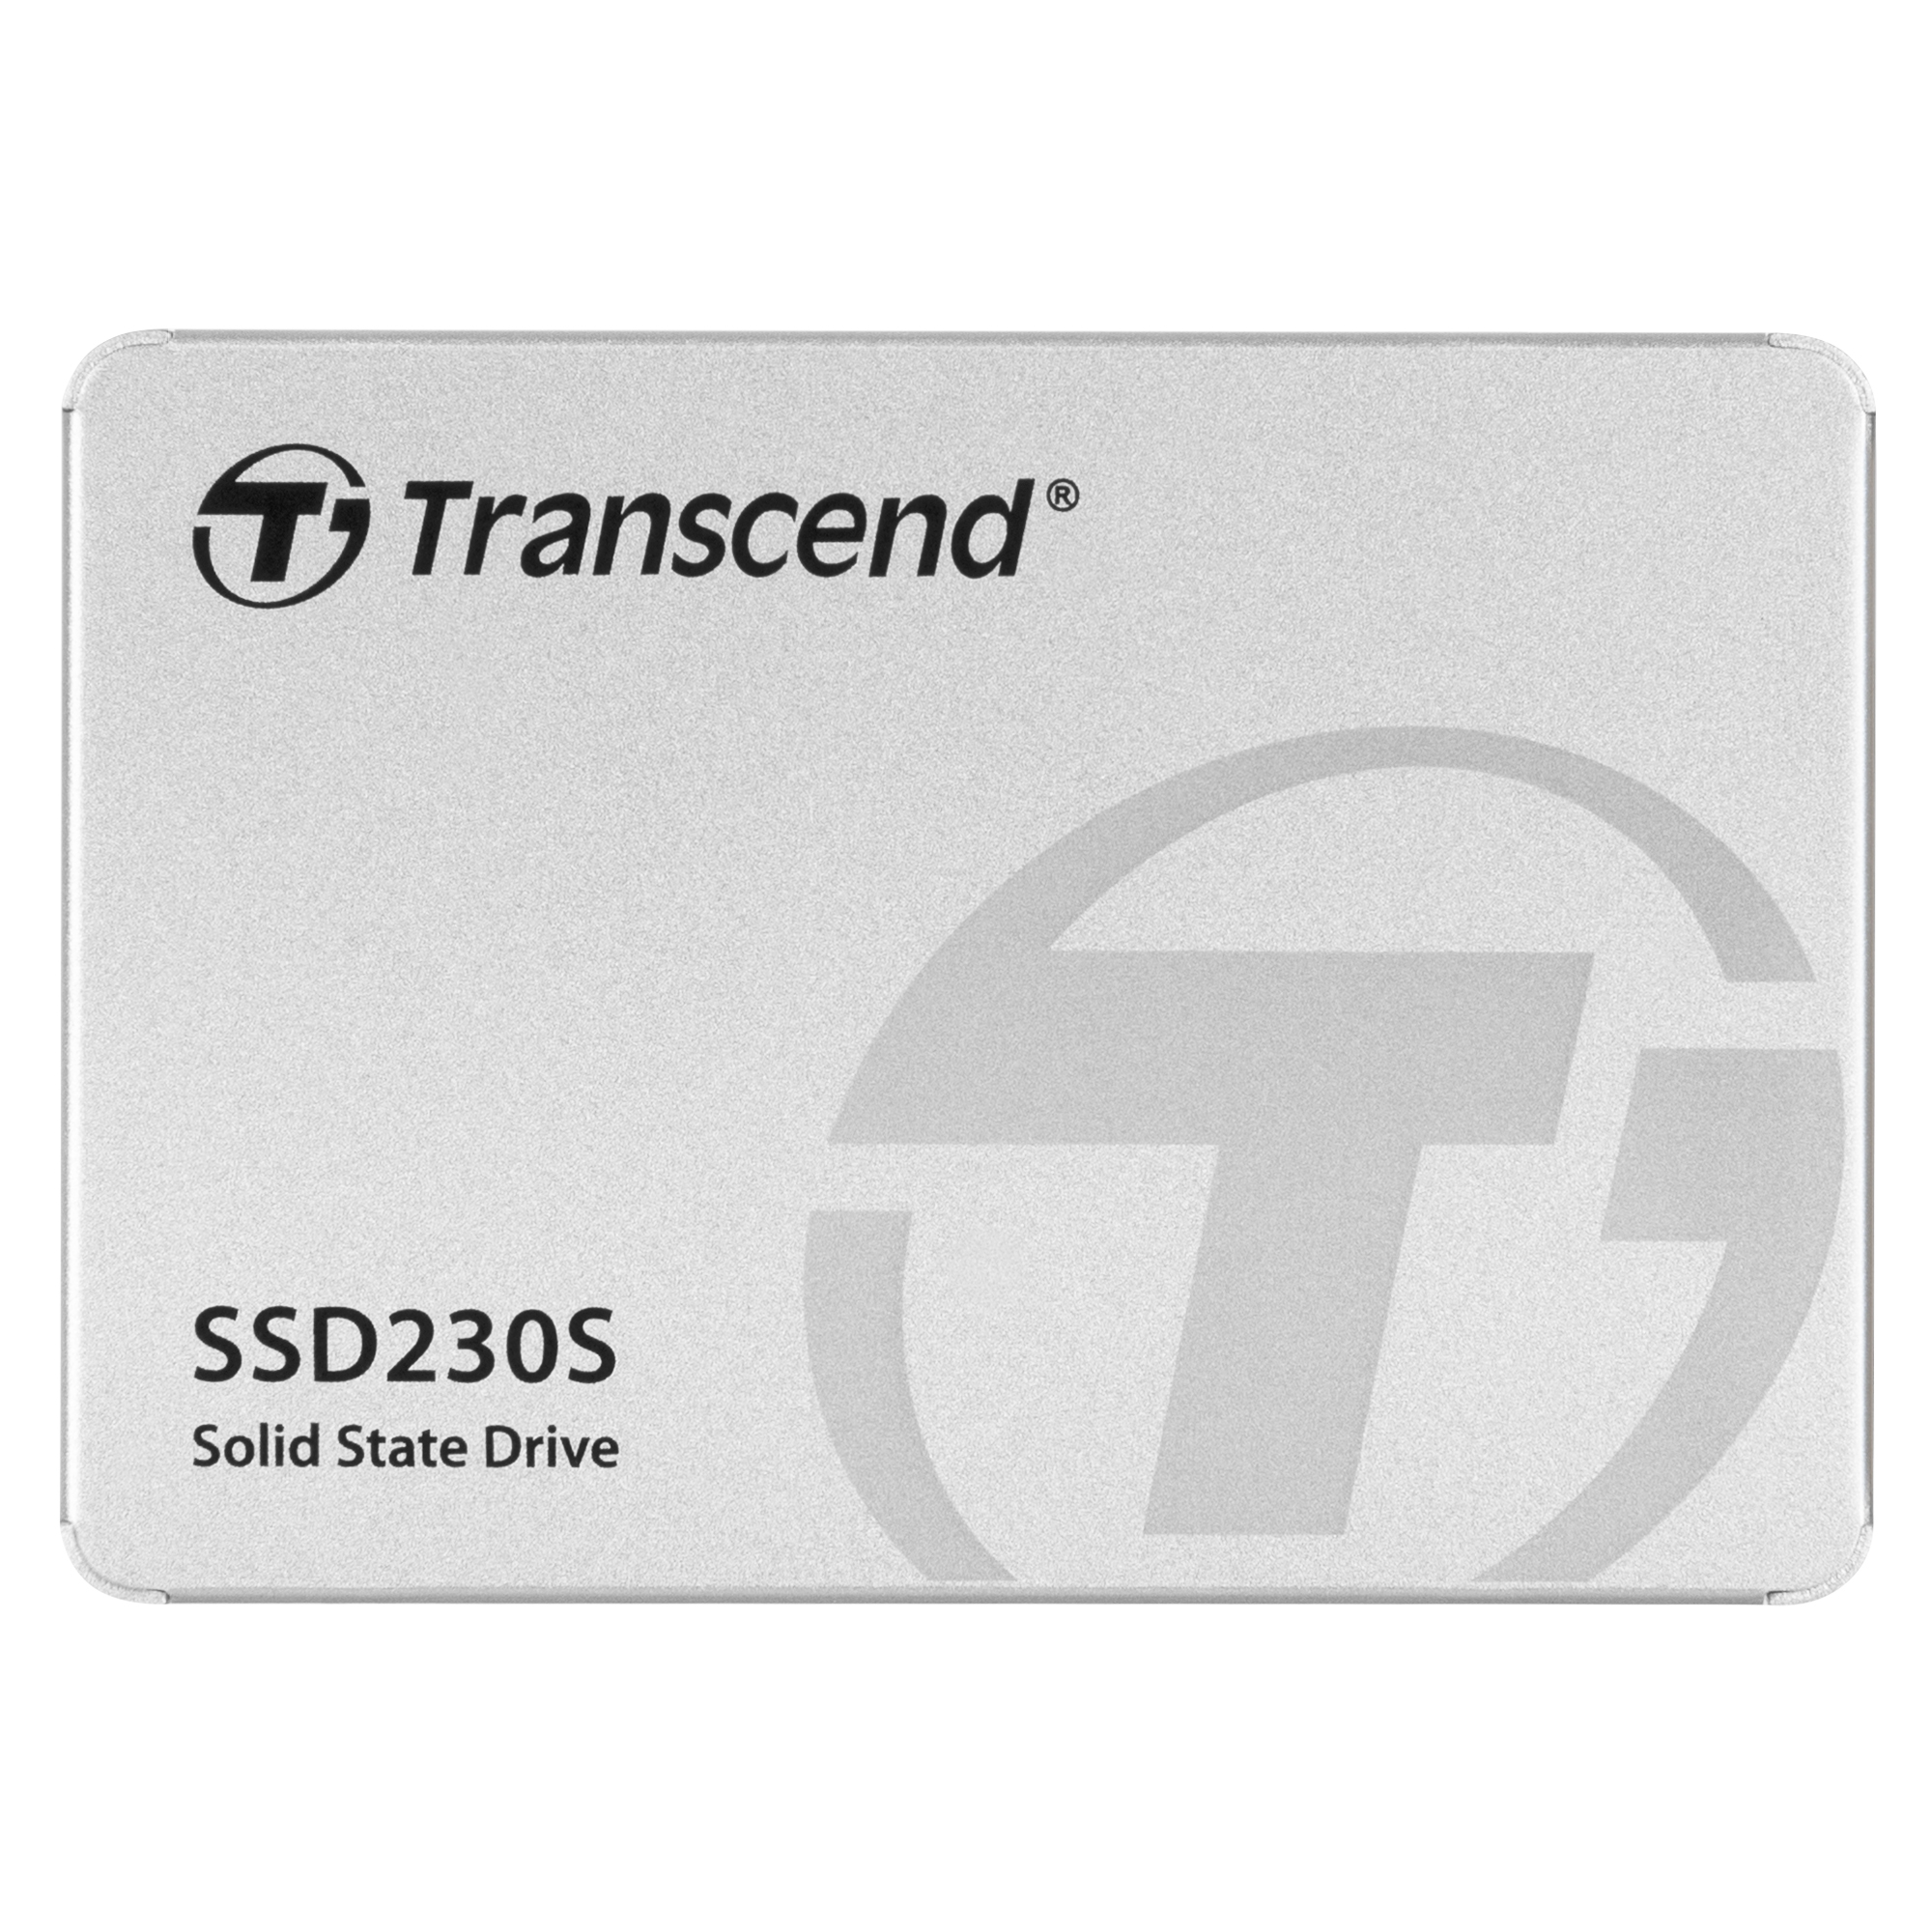 Transcend 512GB MTE110S NVMe PCIe M.2 SSD Gen 3 x4 2280 M-key, 3D